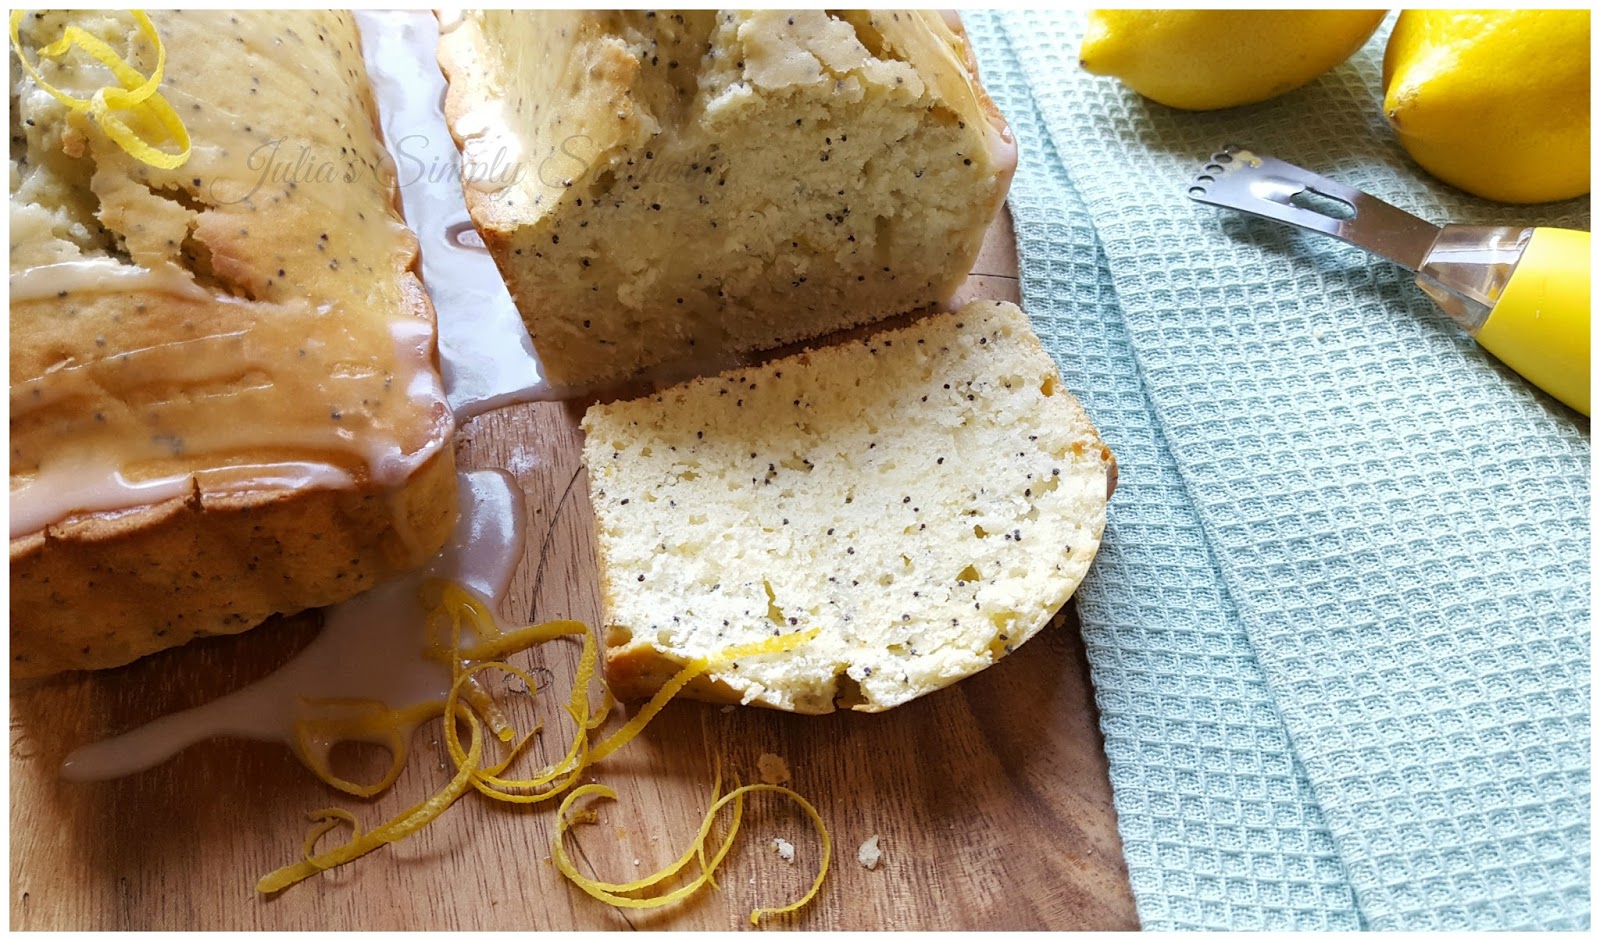 Julia's Simply Southern: Lemon Poppyseed Bread with Lemon Glaze